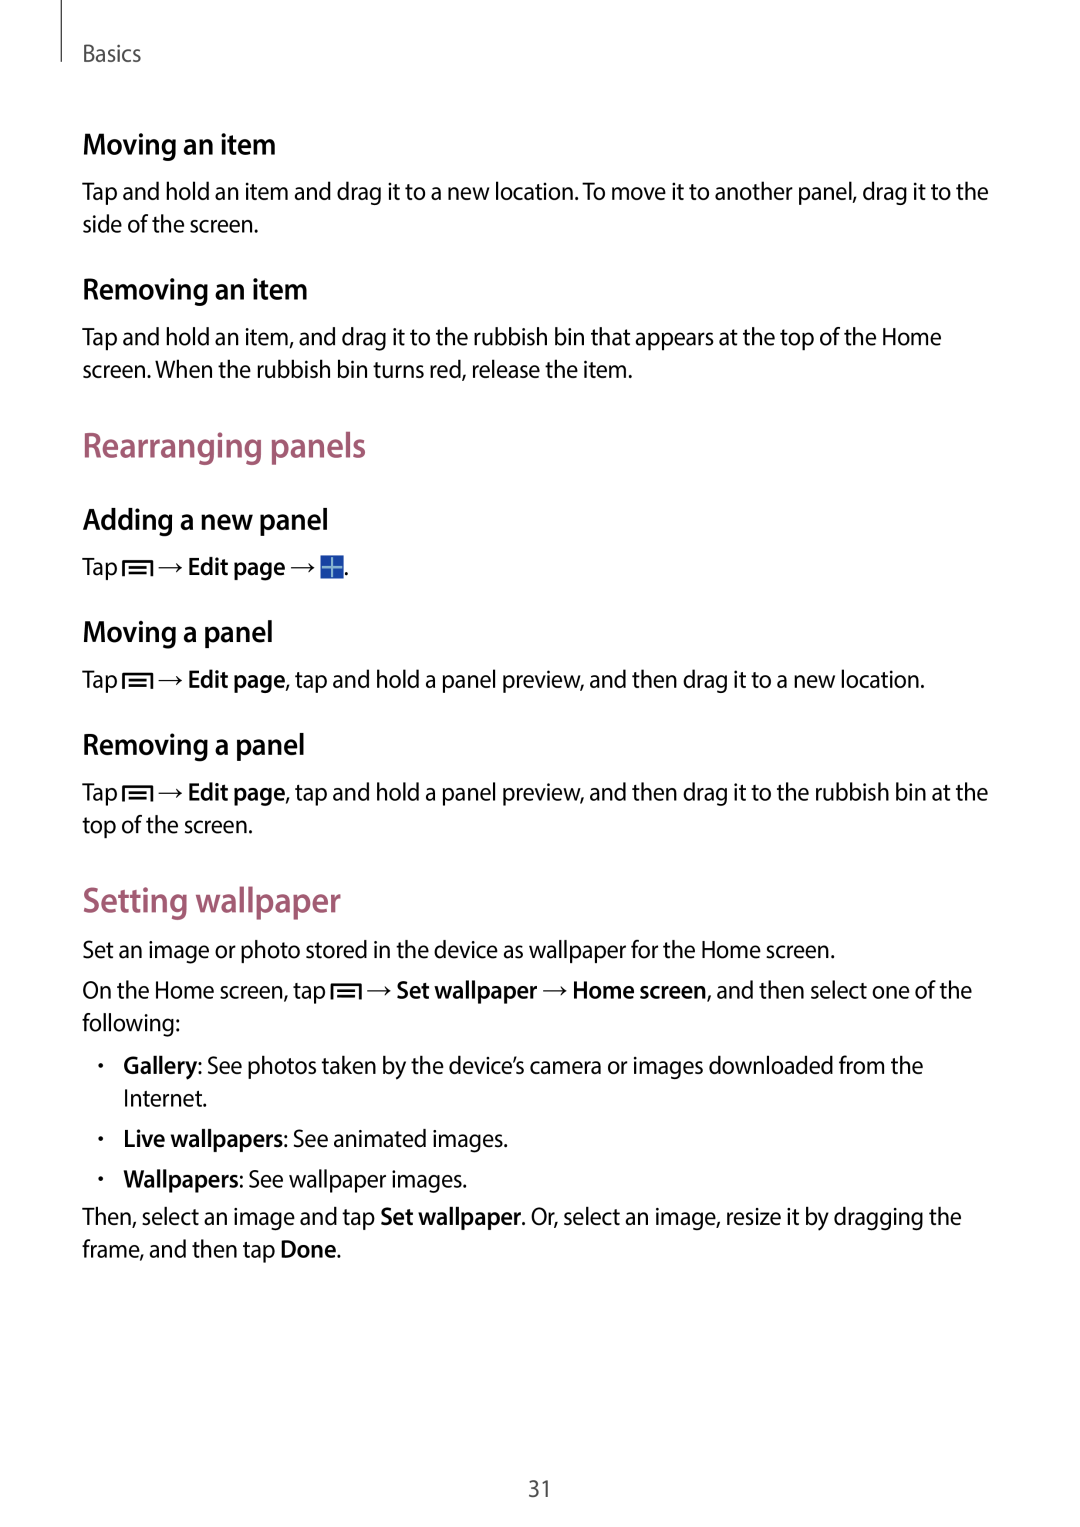 Samsung SM-G7105ZWANEE Rearranging panels, Setting wallpaper, Moving an item, Removing an item, Adding a new panel, Basics 